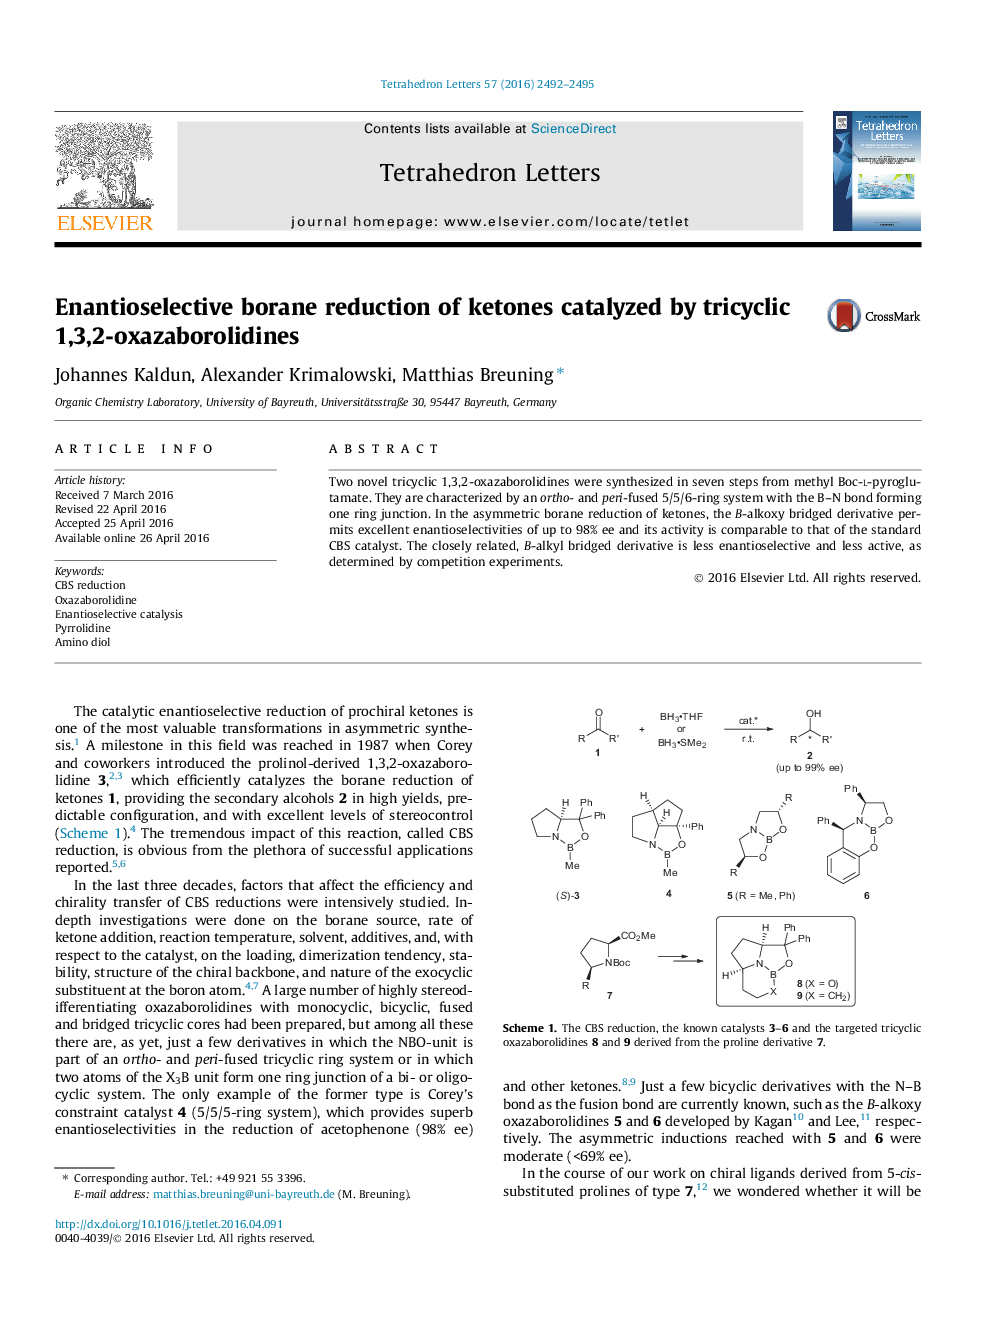 Enantioselective borane reduction of ketones catalyzed by tricyclic 1,3,2-oxazaborolidines